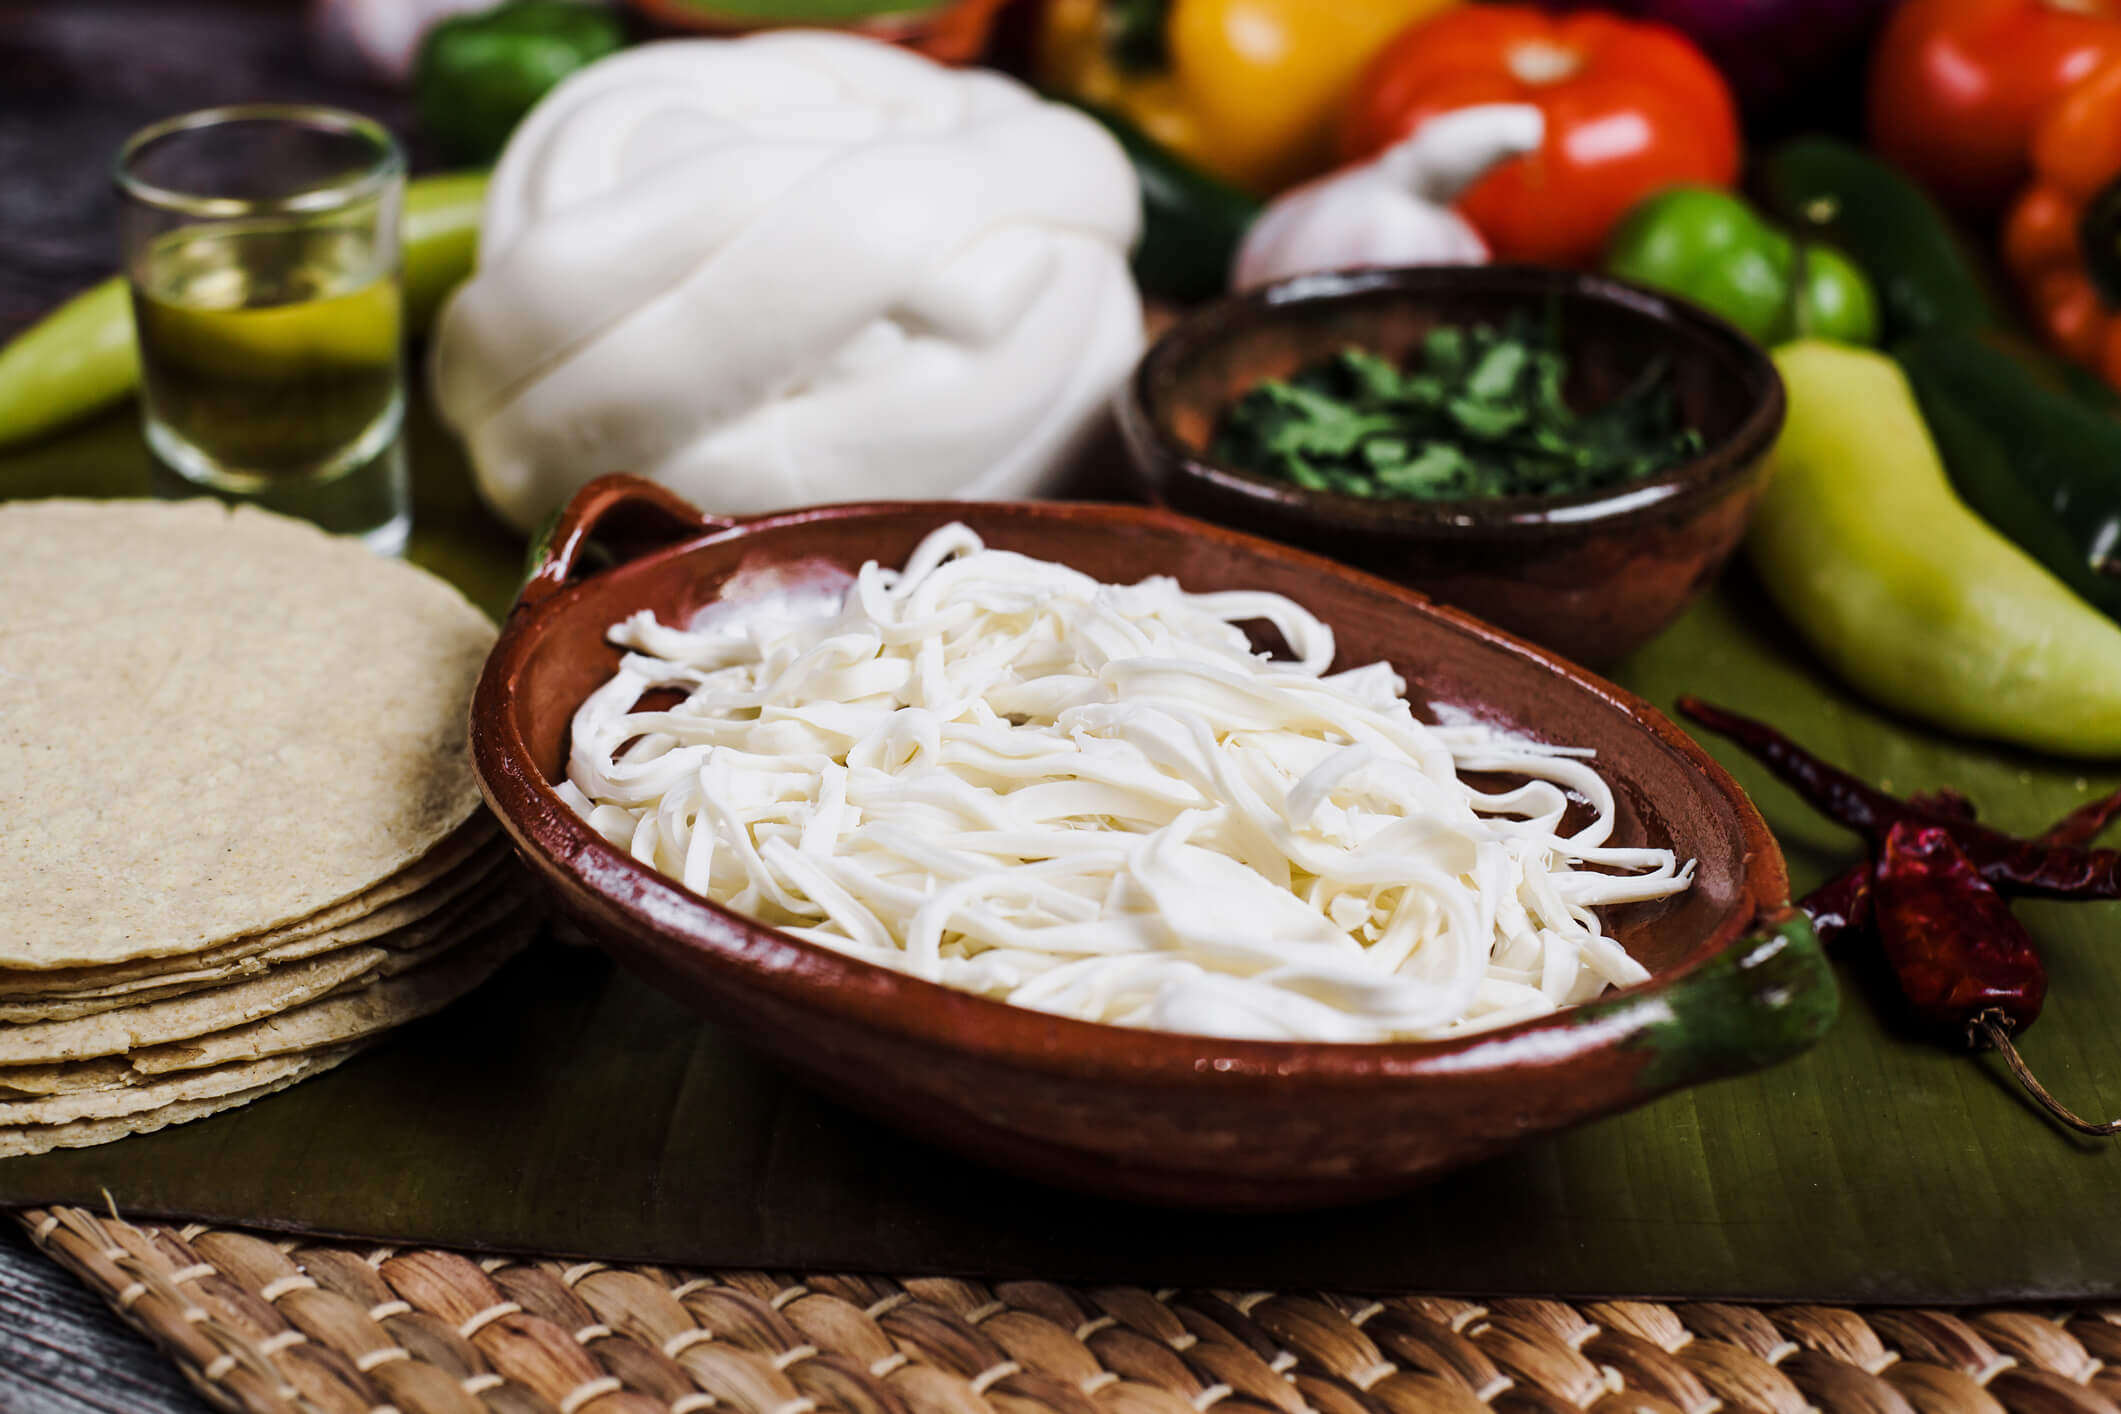 Oaxaca as an Asadero cheese substitute